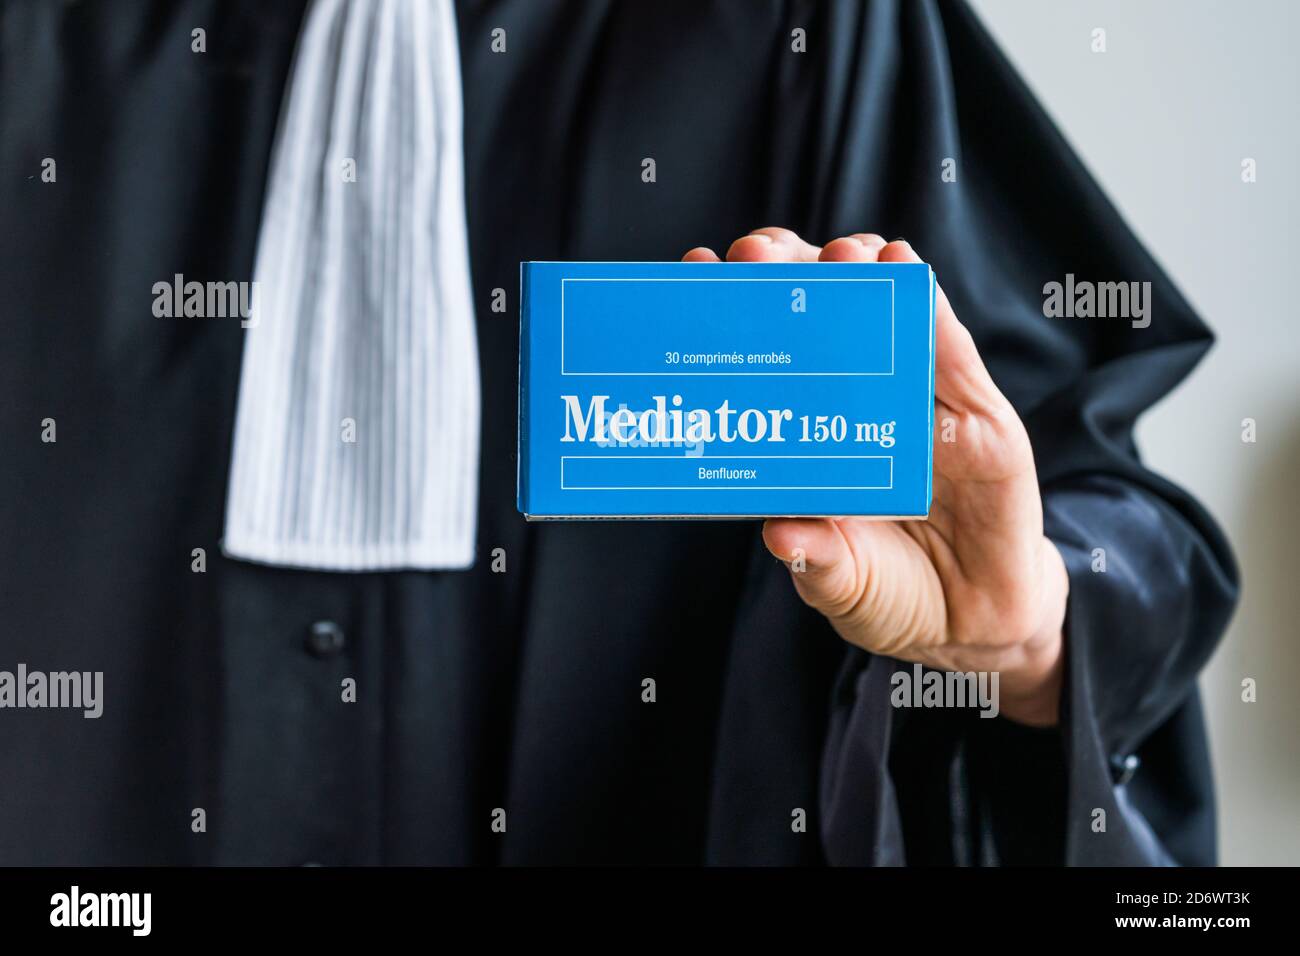 Lawyer holding a box of Mediator ® (chlorhydrate de benfluorex of Laboratoires Servier). Stock Photo